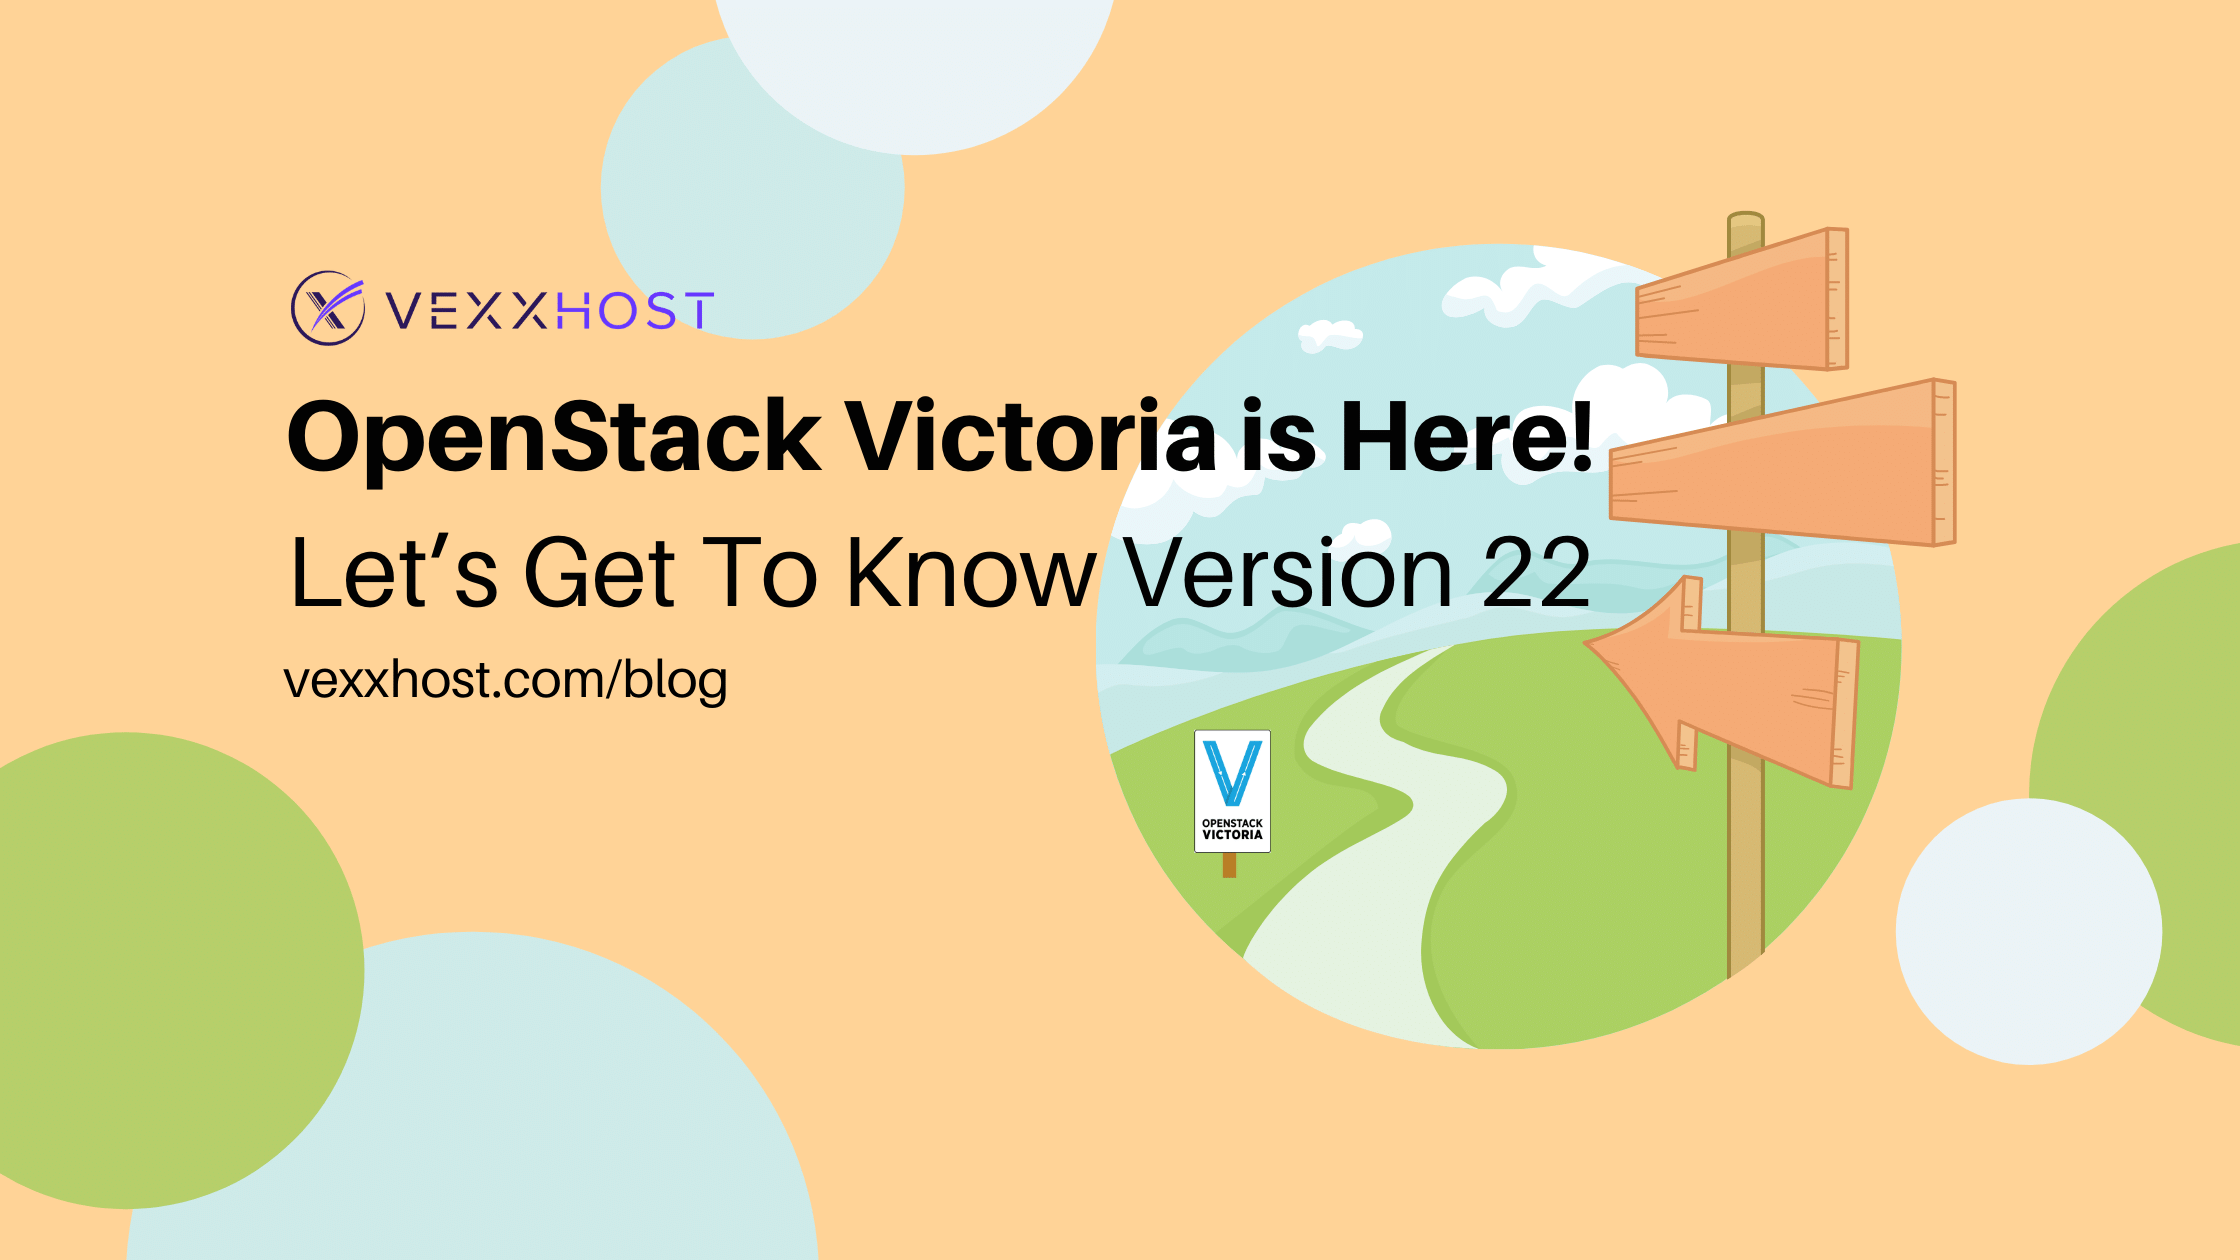 openstack victoria update blog header illustration